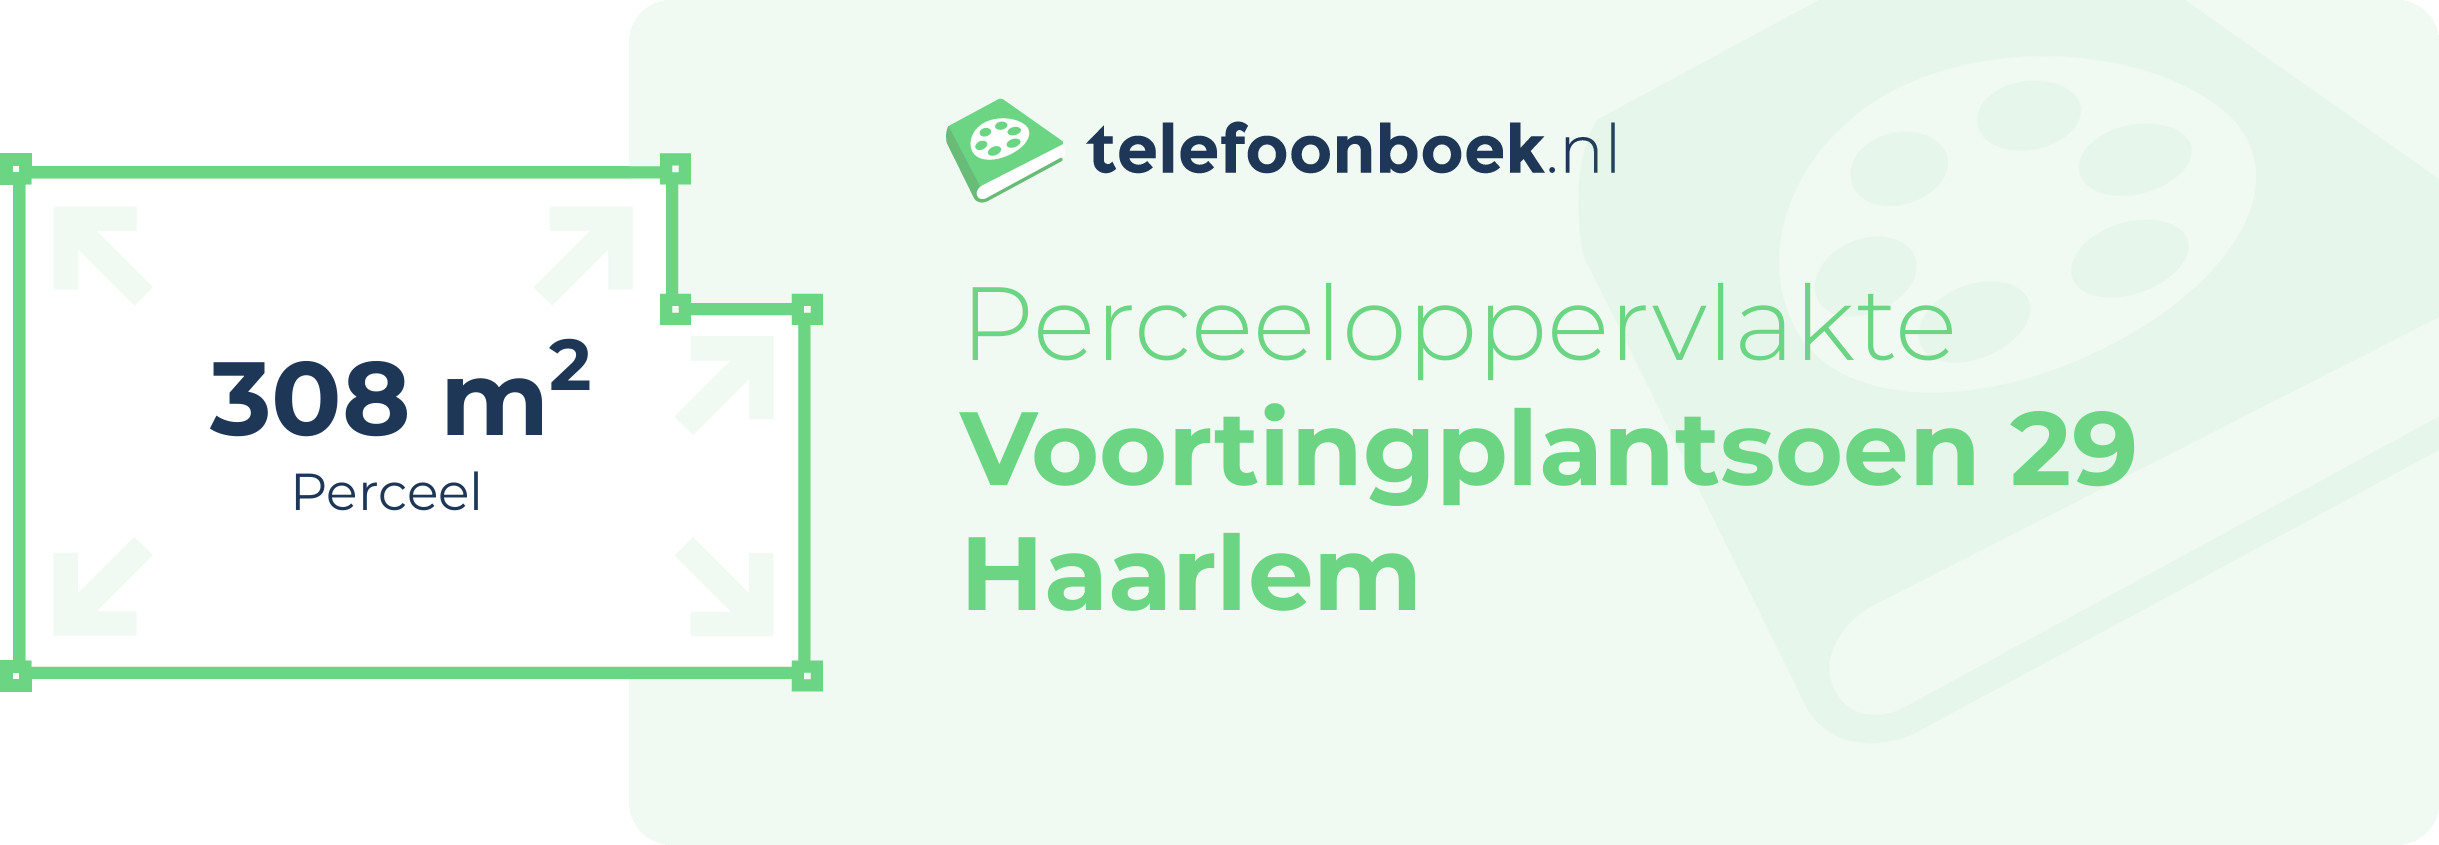 Perceeloppervlakte Voortingplantsoen 29 Haarlem